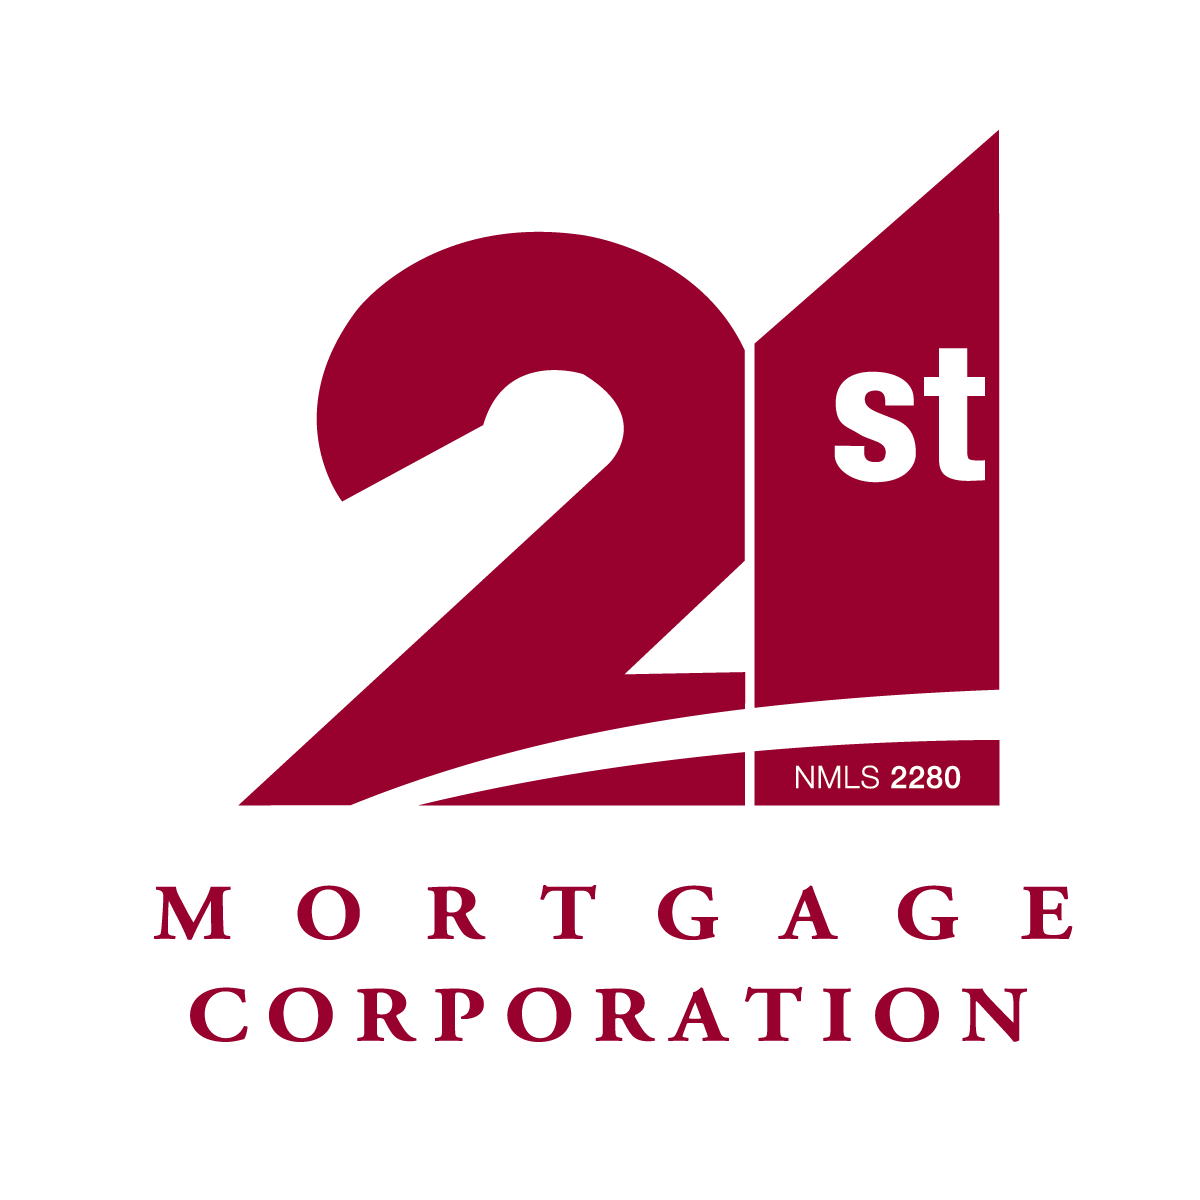 21st Mortgage Corporation